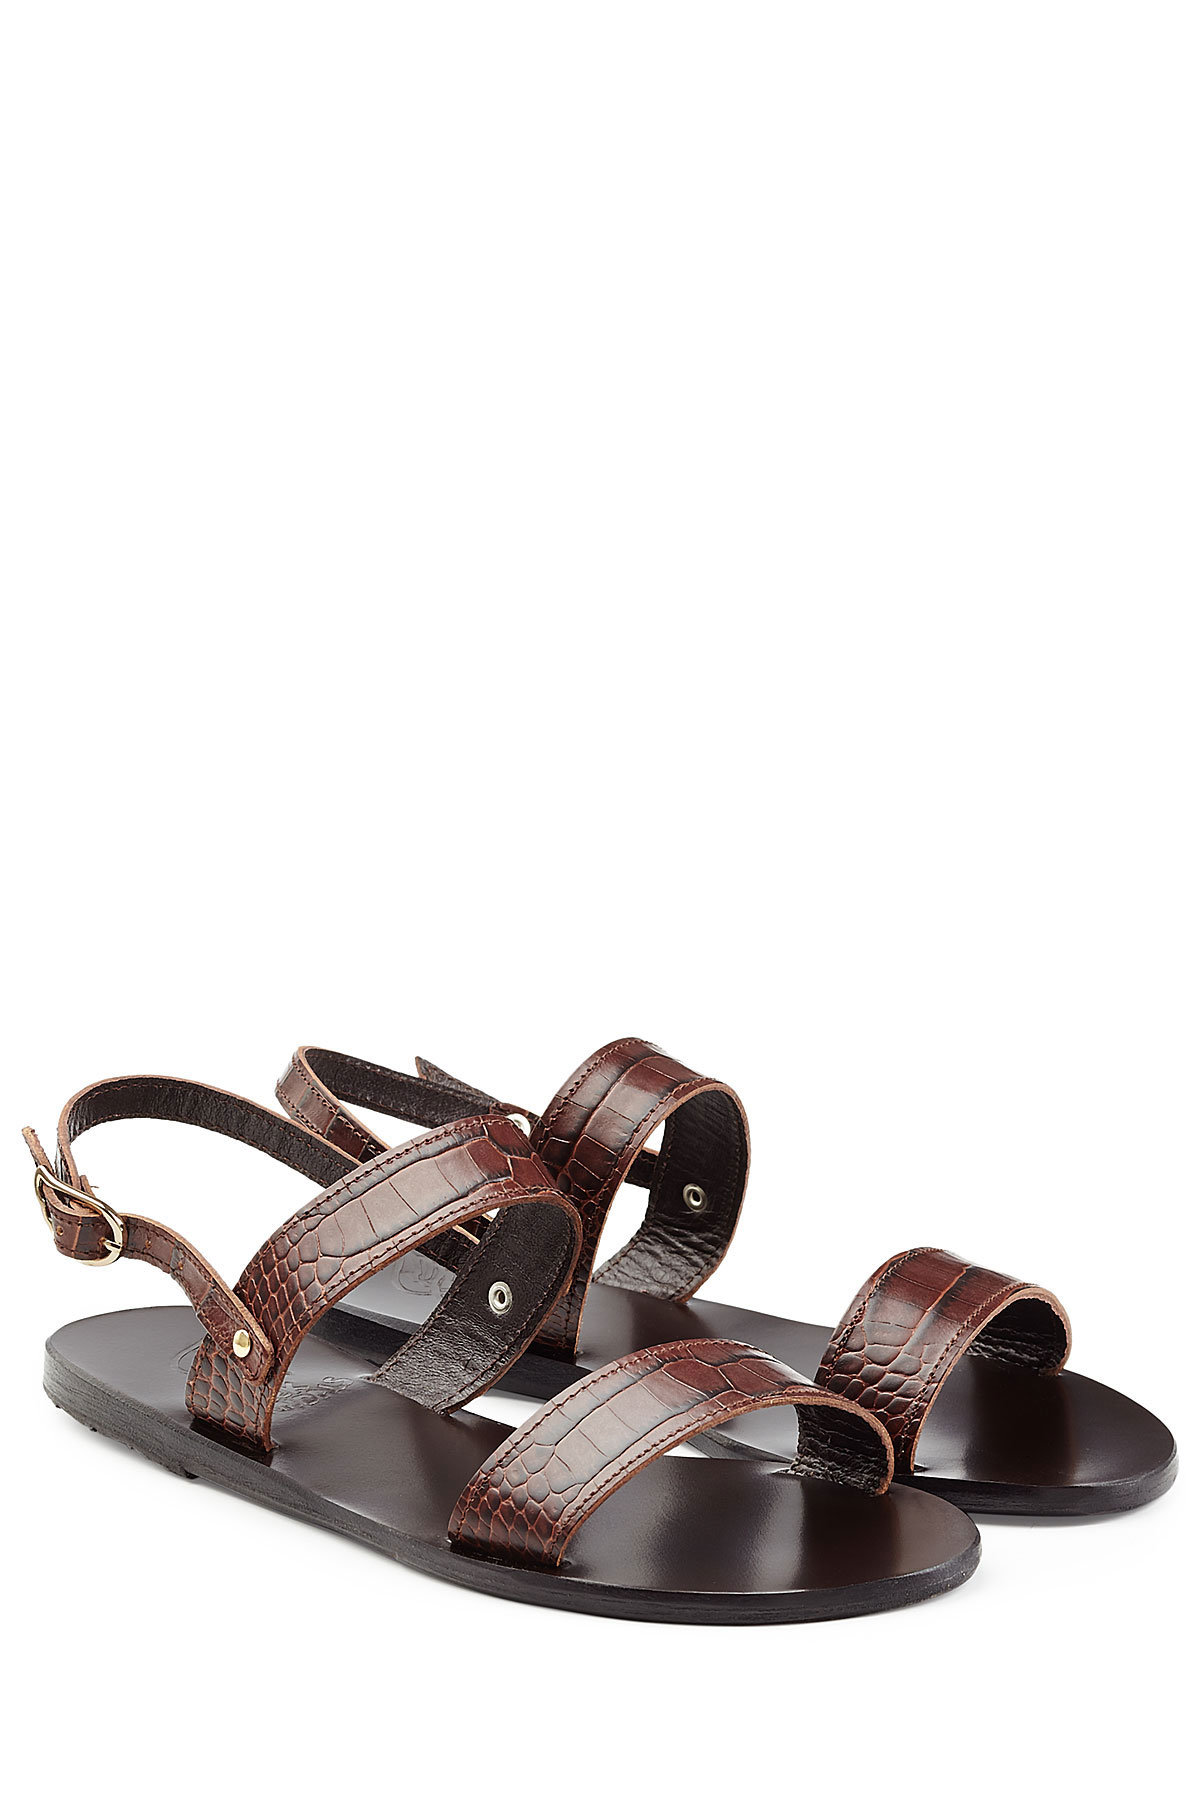 Ancient Greek Sandals - Croc-Embossed Flat Leather Sandals